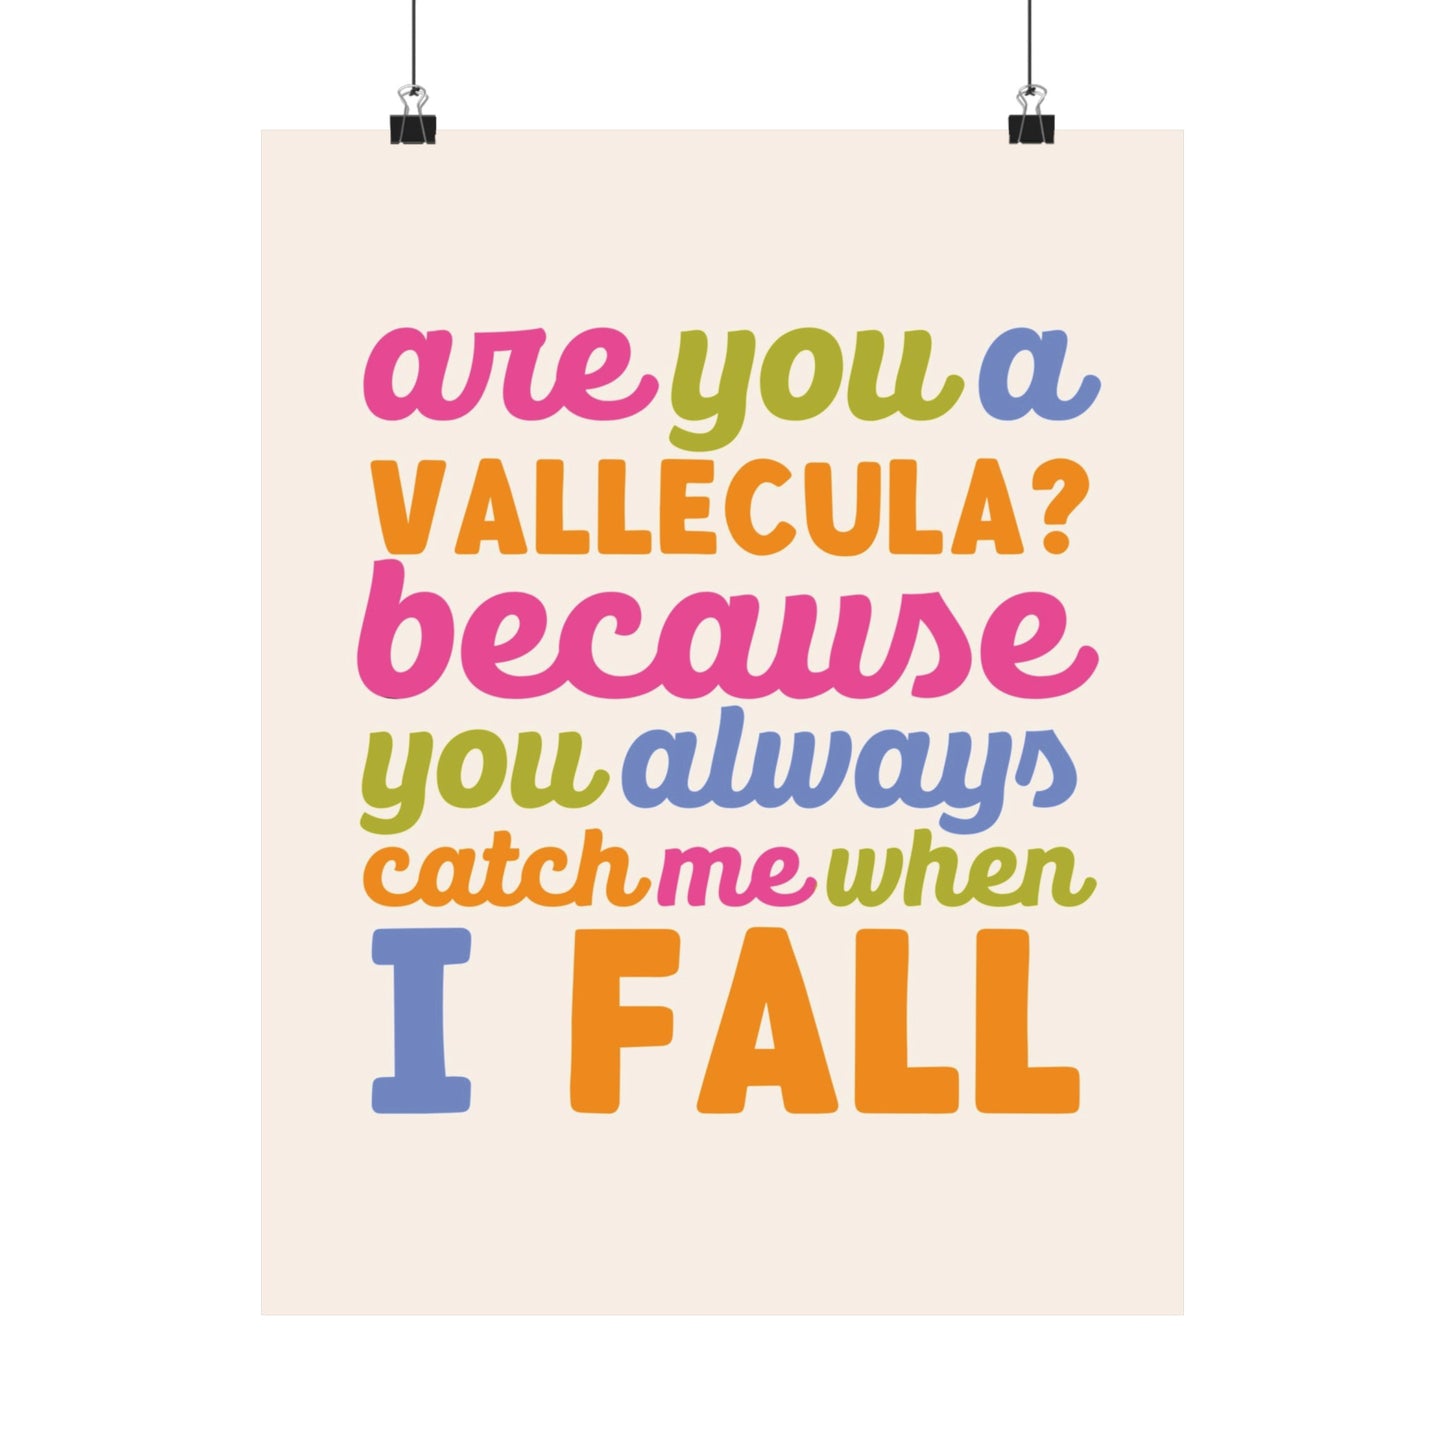 Are You A Vallecula Poster